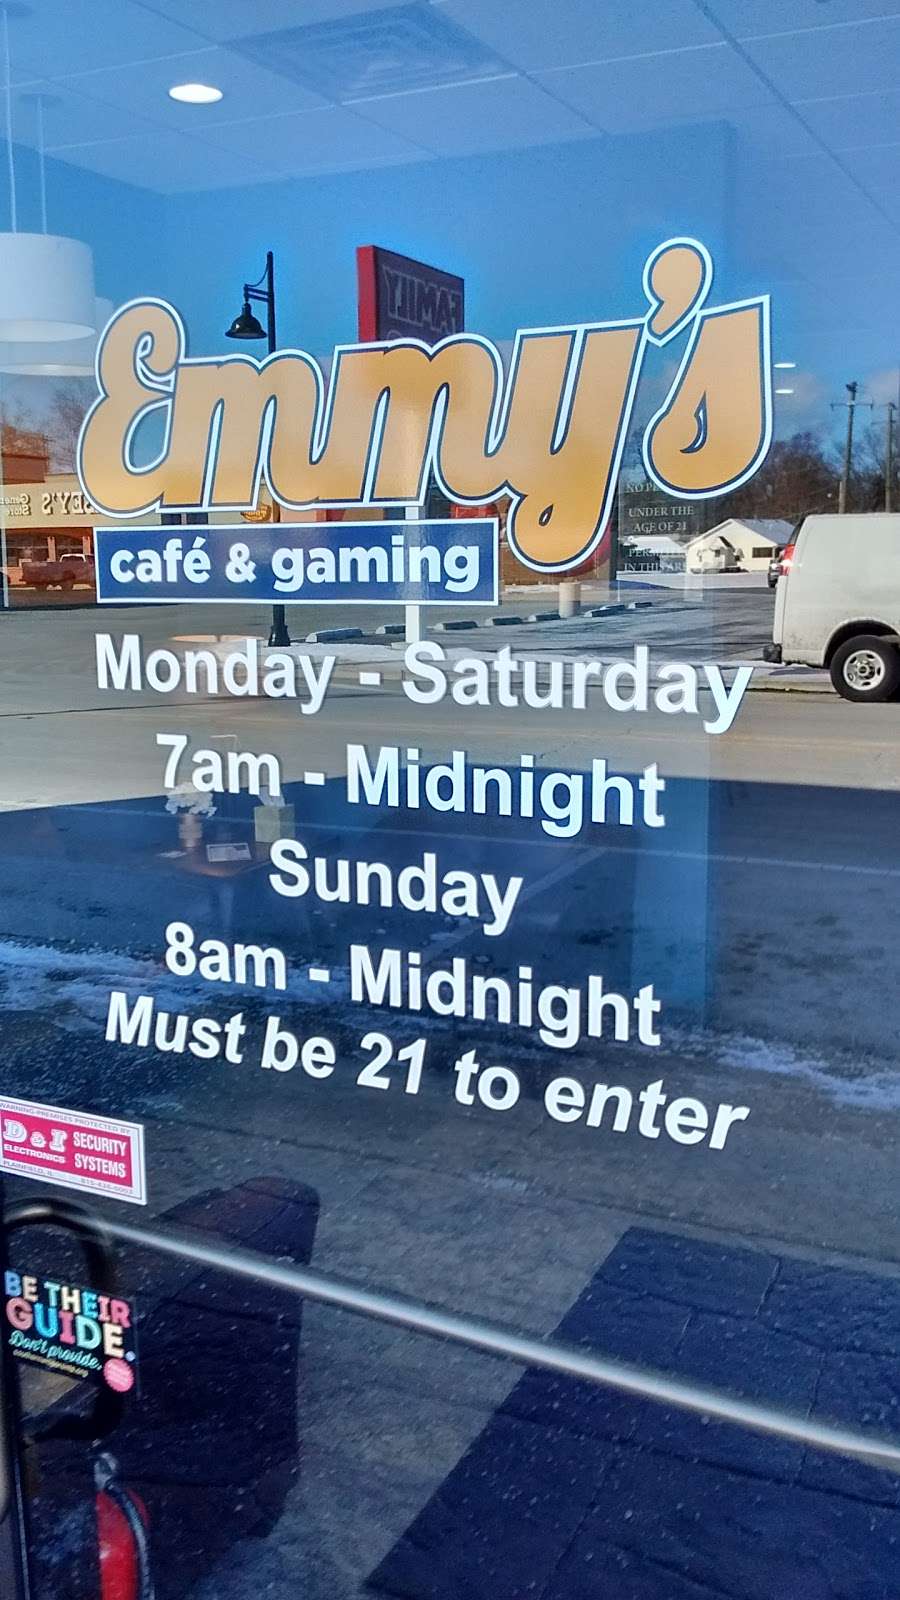 Emmys Cafe & Gaming | 219 E Main St, Braidwood, IL 60408 | Phone: (815) 390-5133